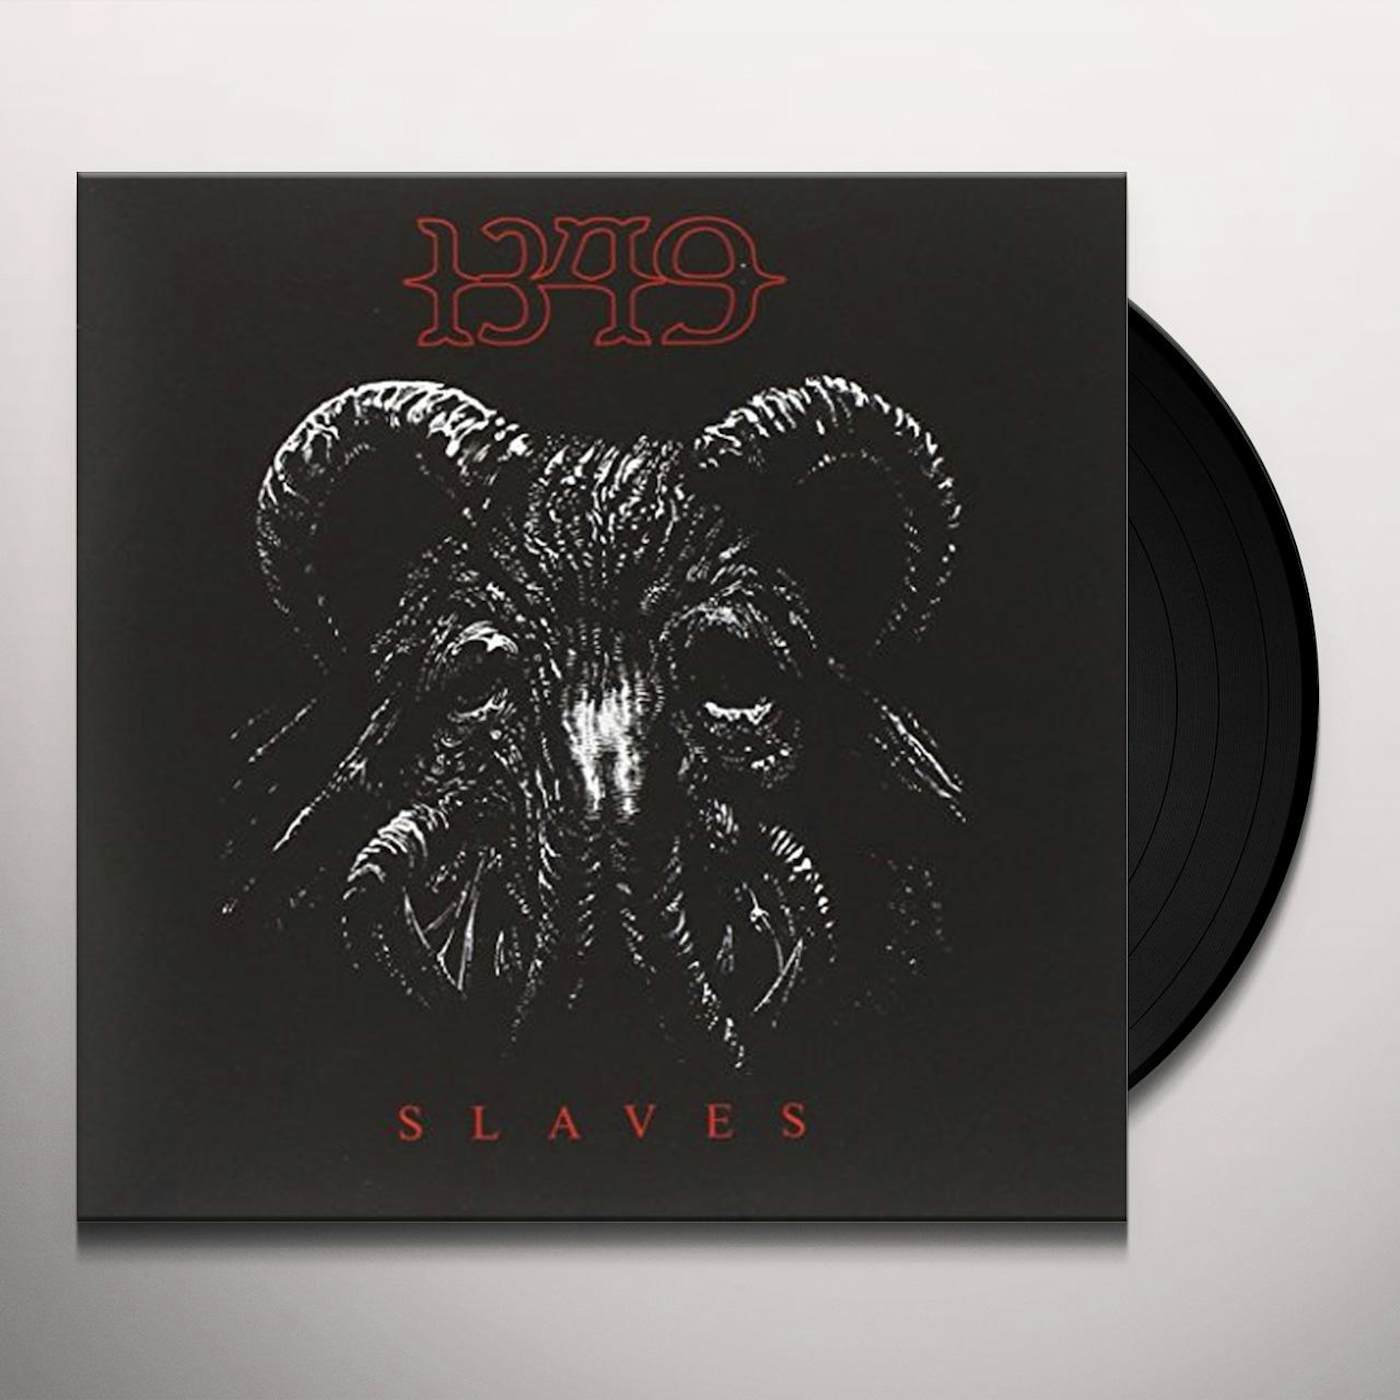 Slaves Vinyl Record